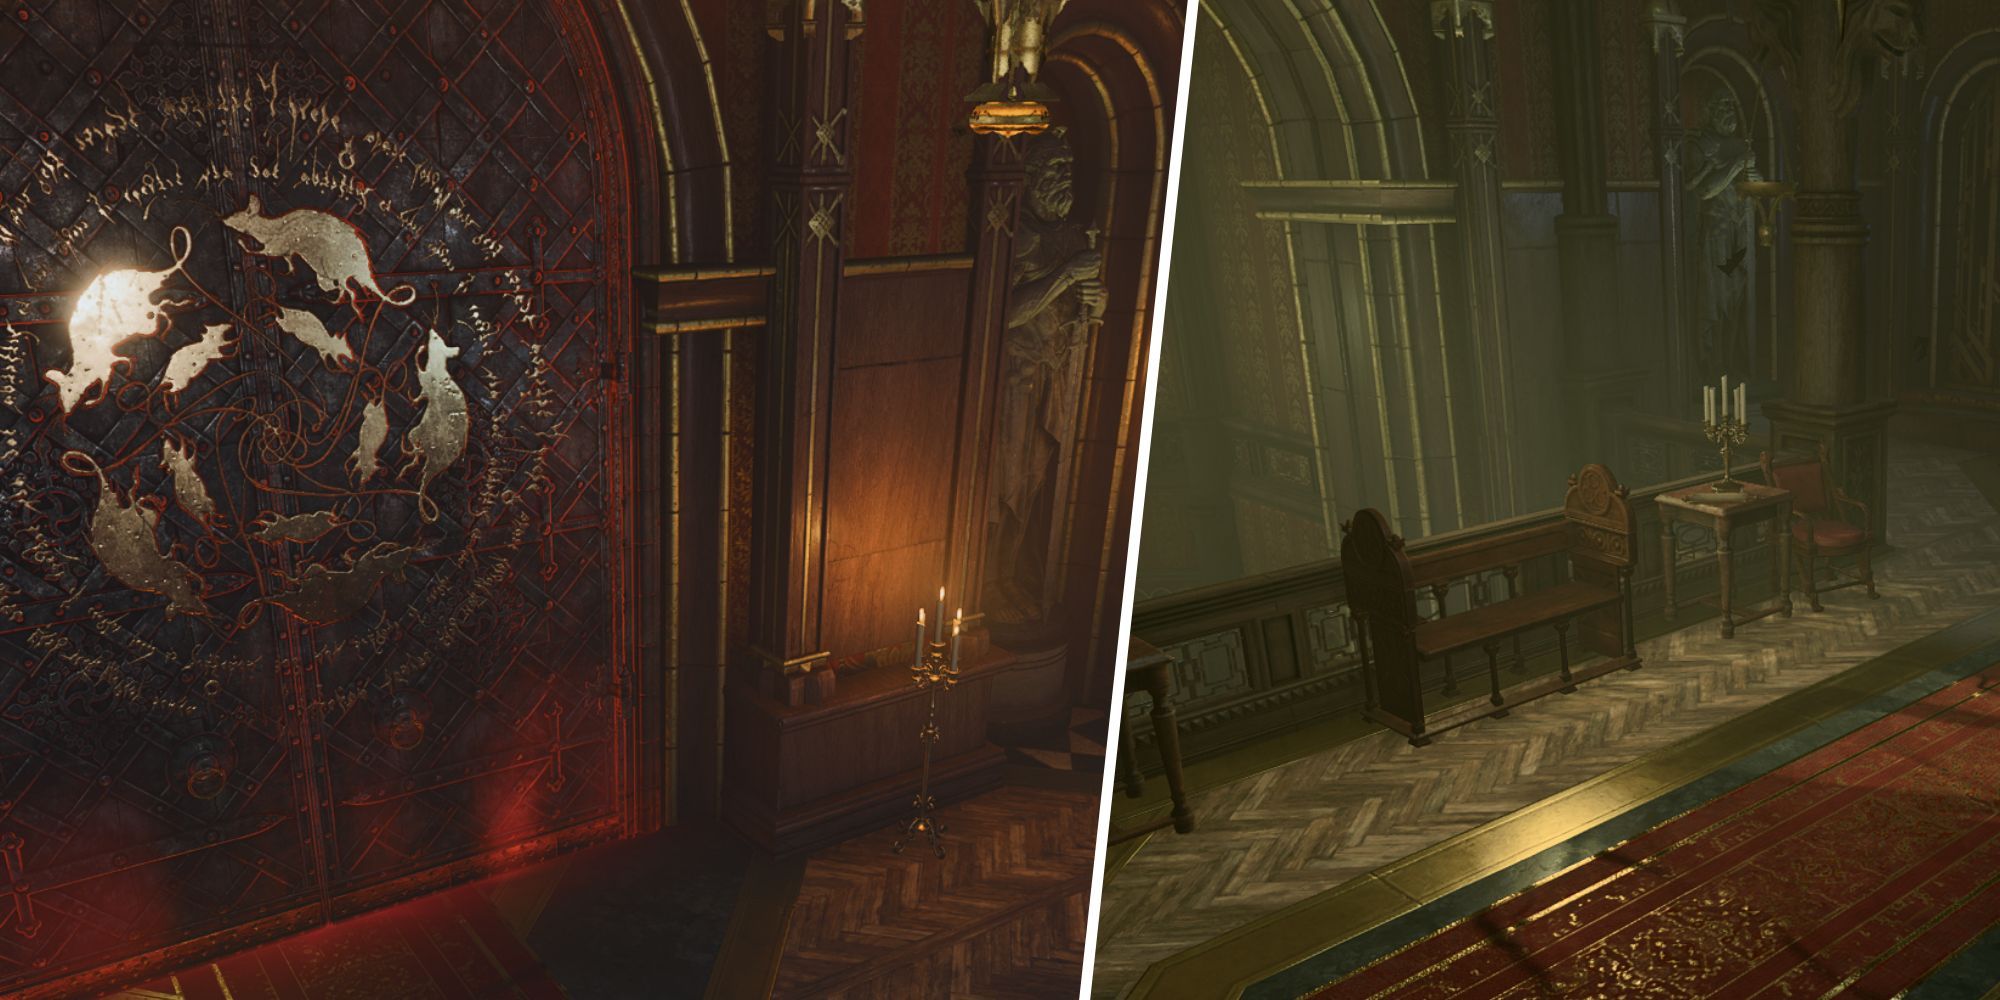 Baldur's Gate 3 - Split image: Cazador's Sinister Door and a hallway in the Szarr Palace